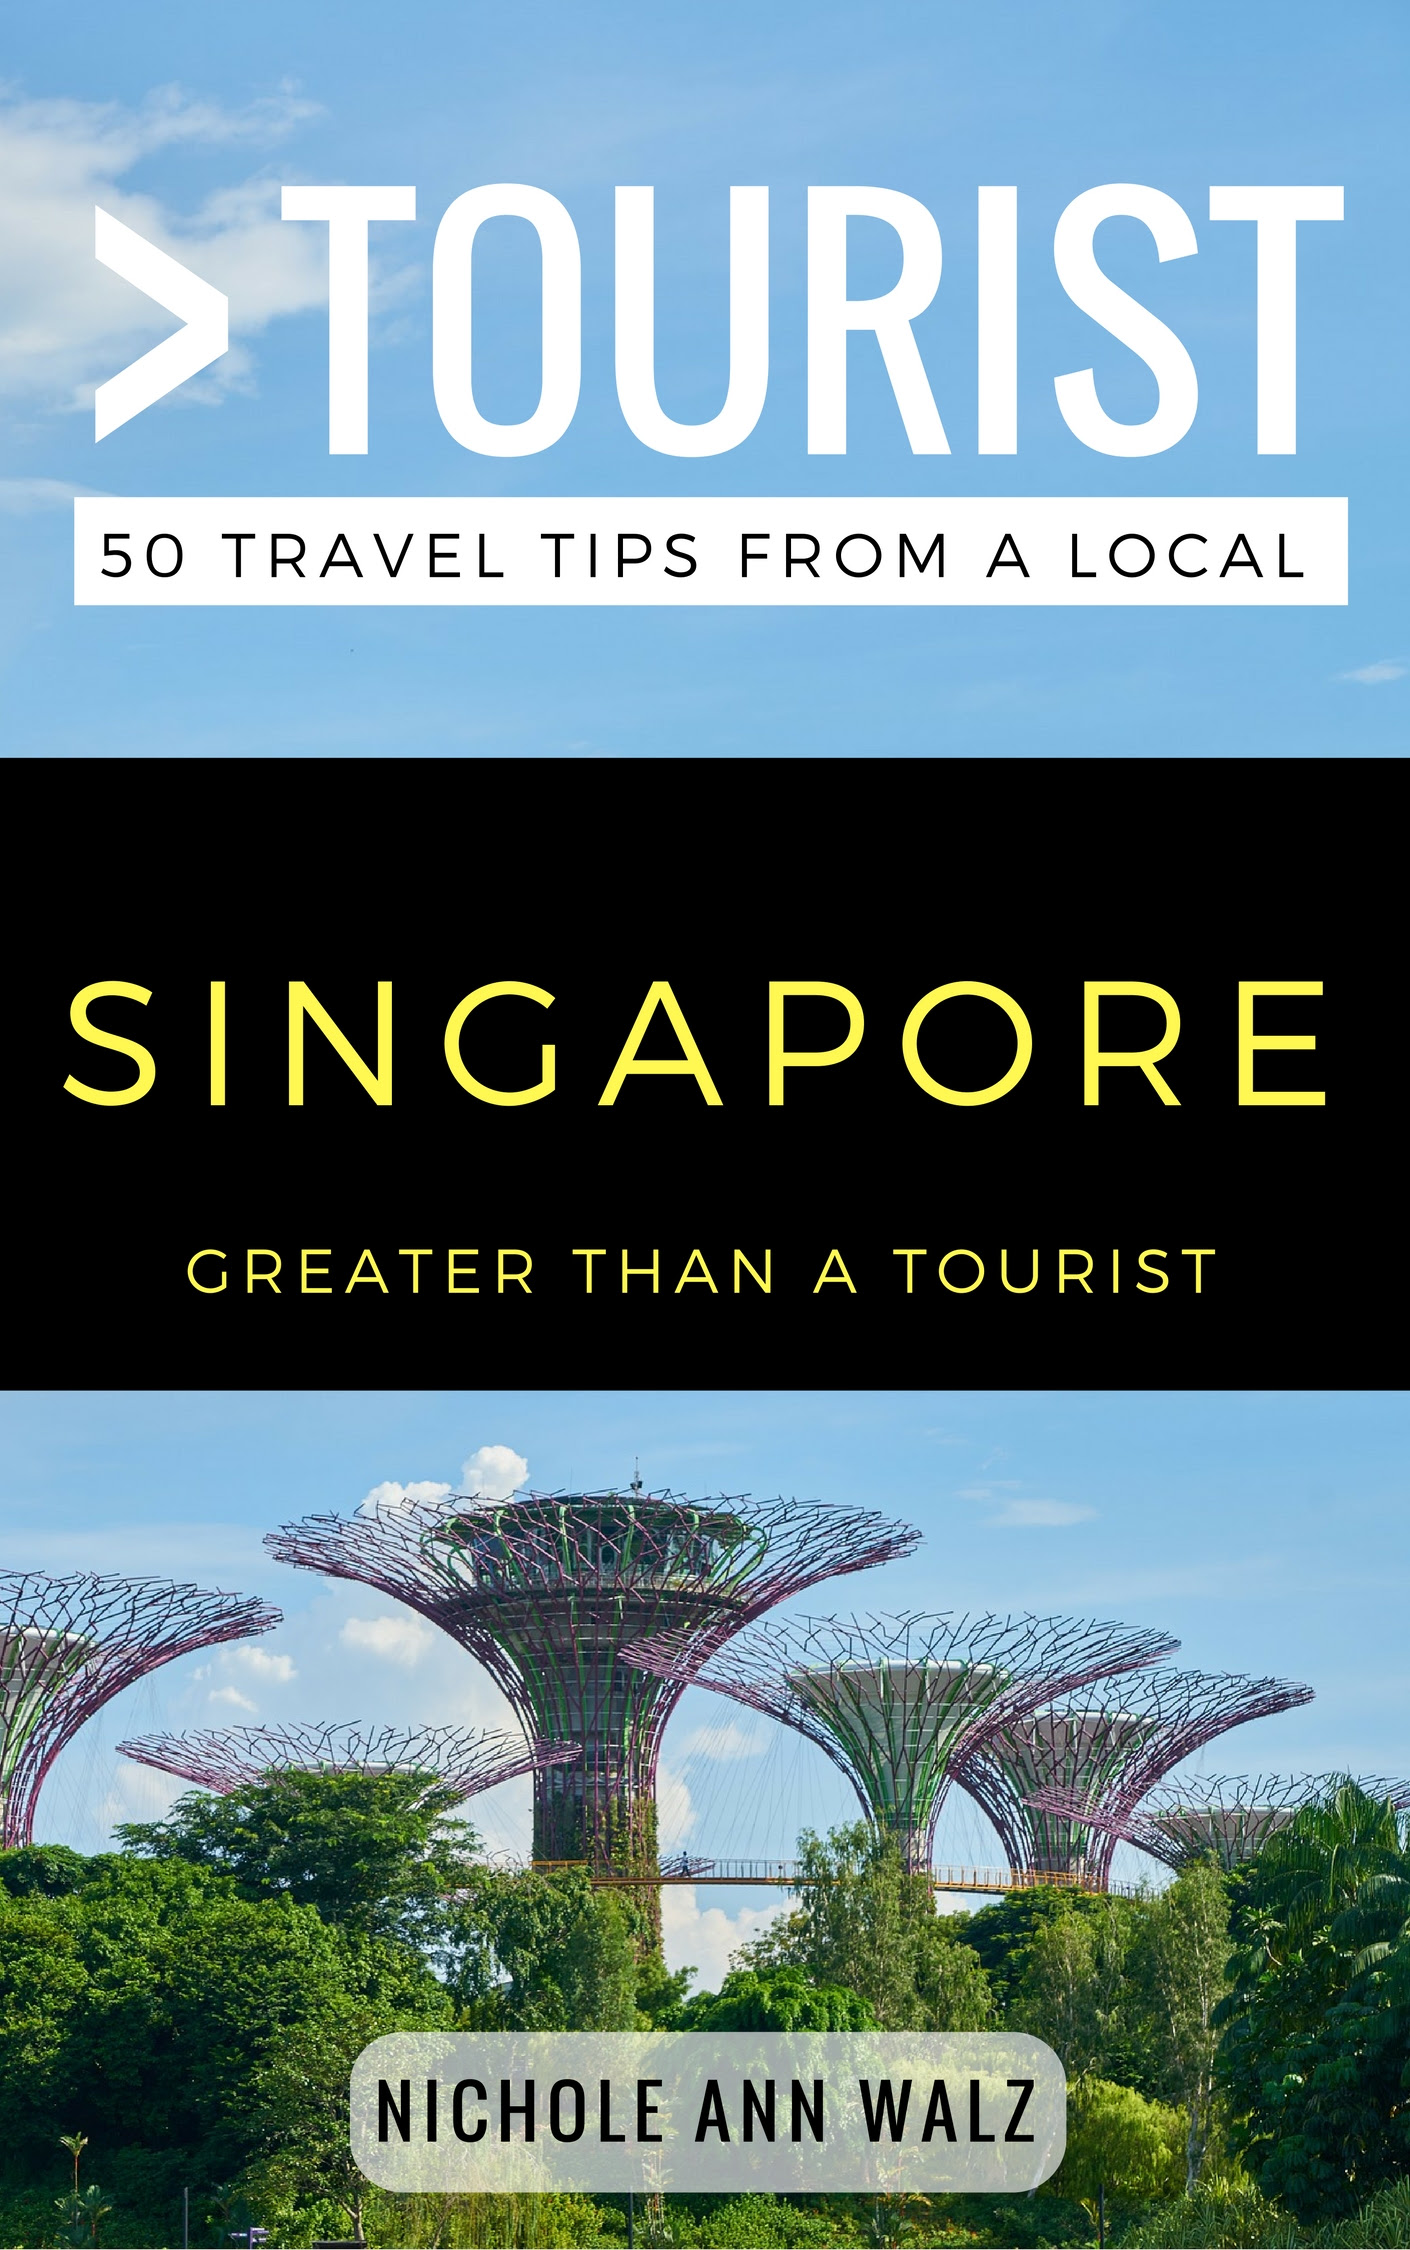 Greater Than A Tourist, Singapore: Nichole Ann Walz 